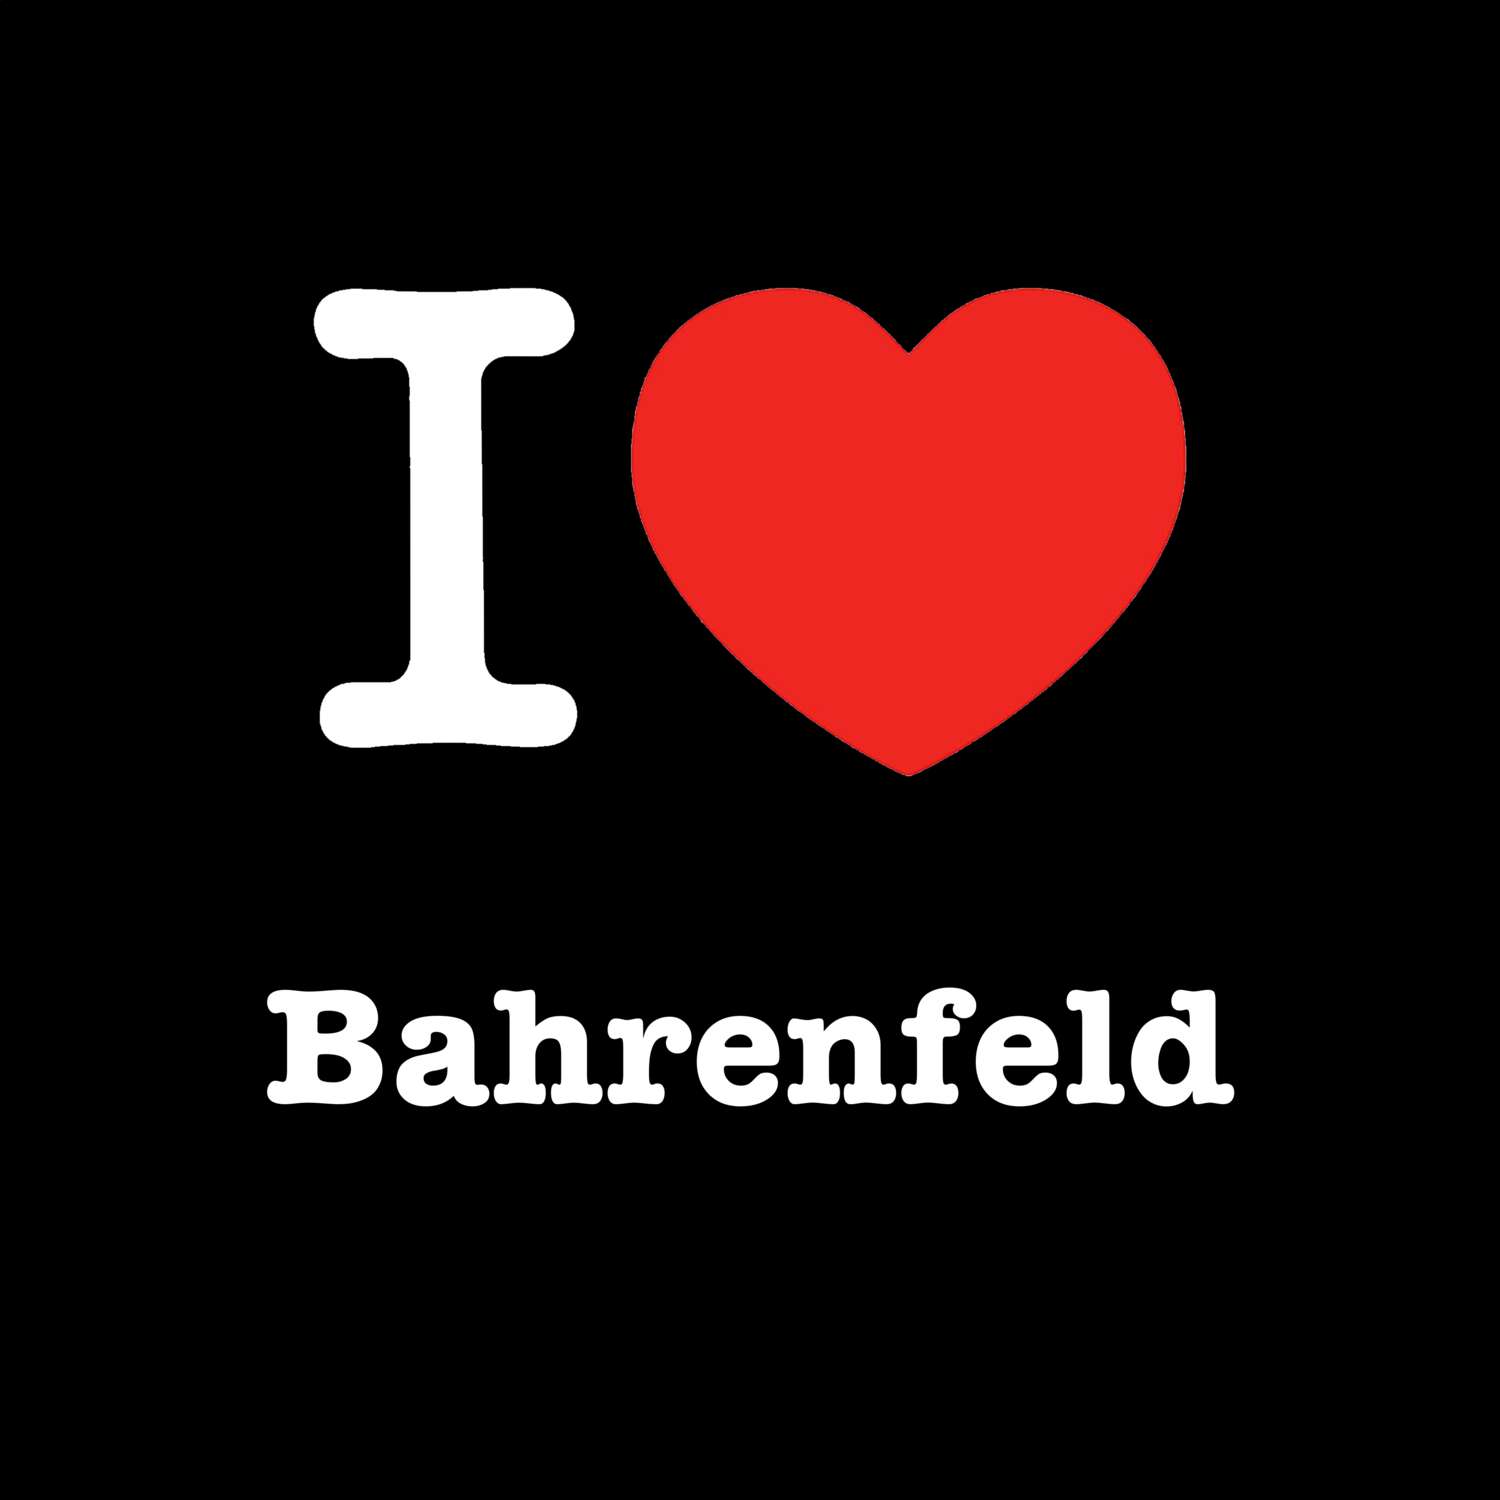 Bahrenfeld T-Shirt »I love«